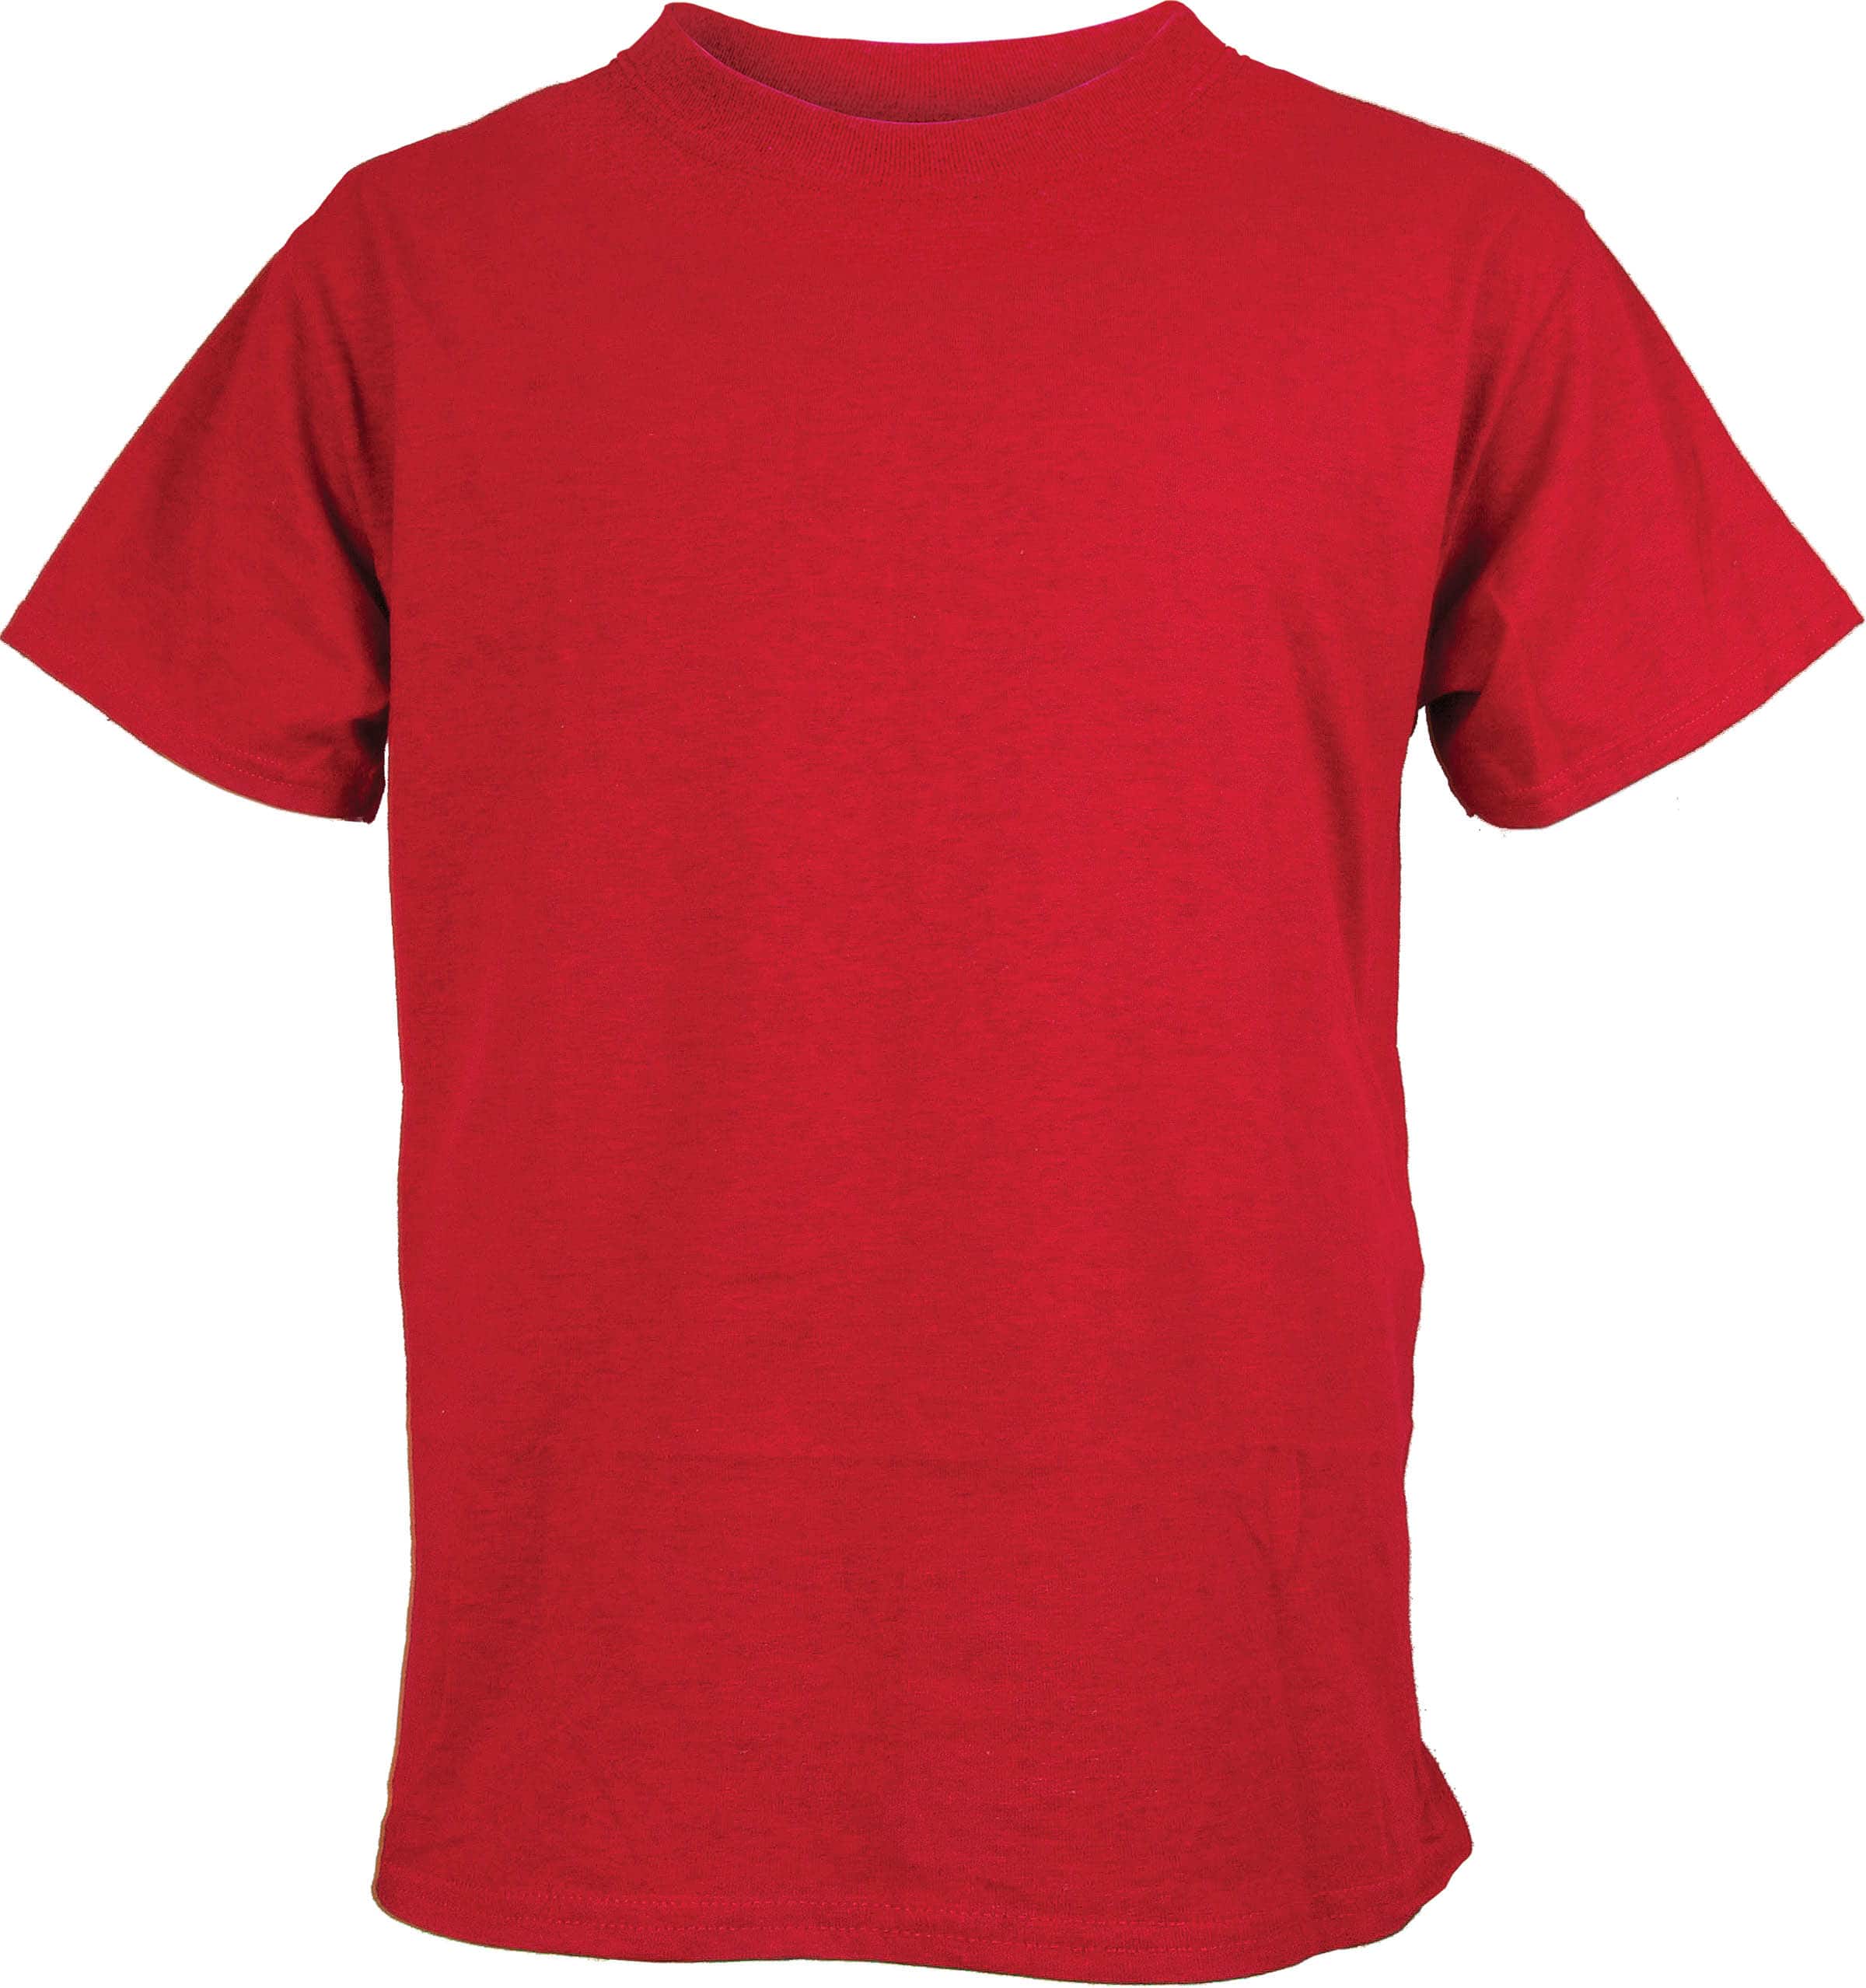 Unisex Cotton T-Shirt Blank for Heat Transfer Vinyl Men's Crew Neck Black T-Shirts for HTV Add-On Design Option Plus Sized T Shirt